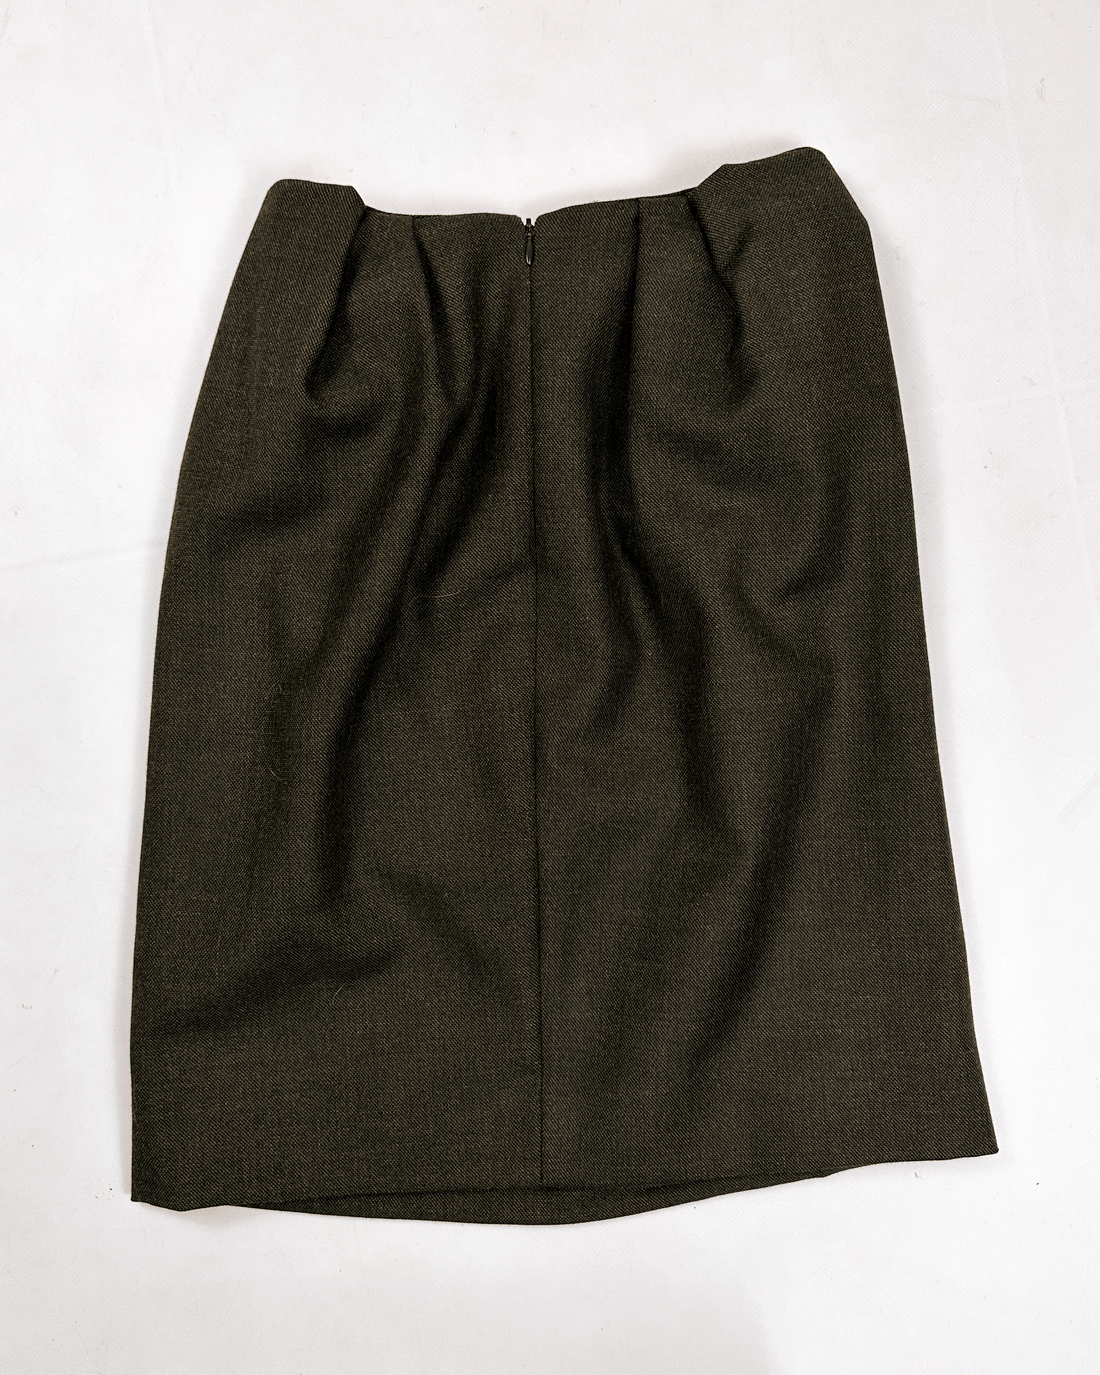 Marni 3-D Pleated Wool Skirt 2000's